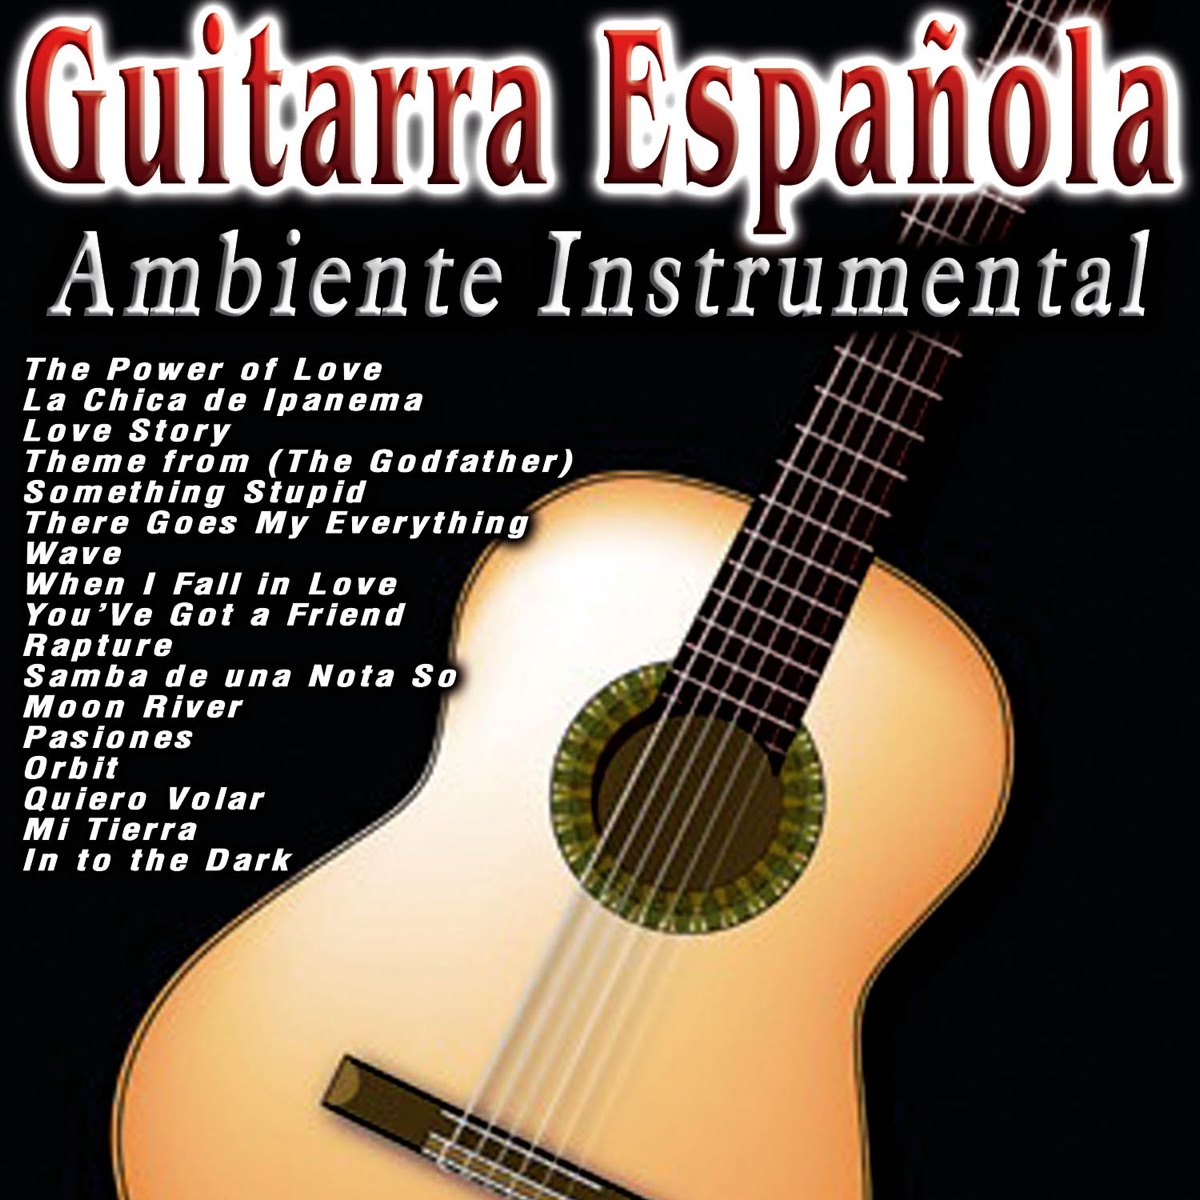 Guitarra Española: Ambiente Instrumental by Paco Nula on Apple Music